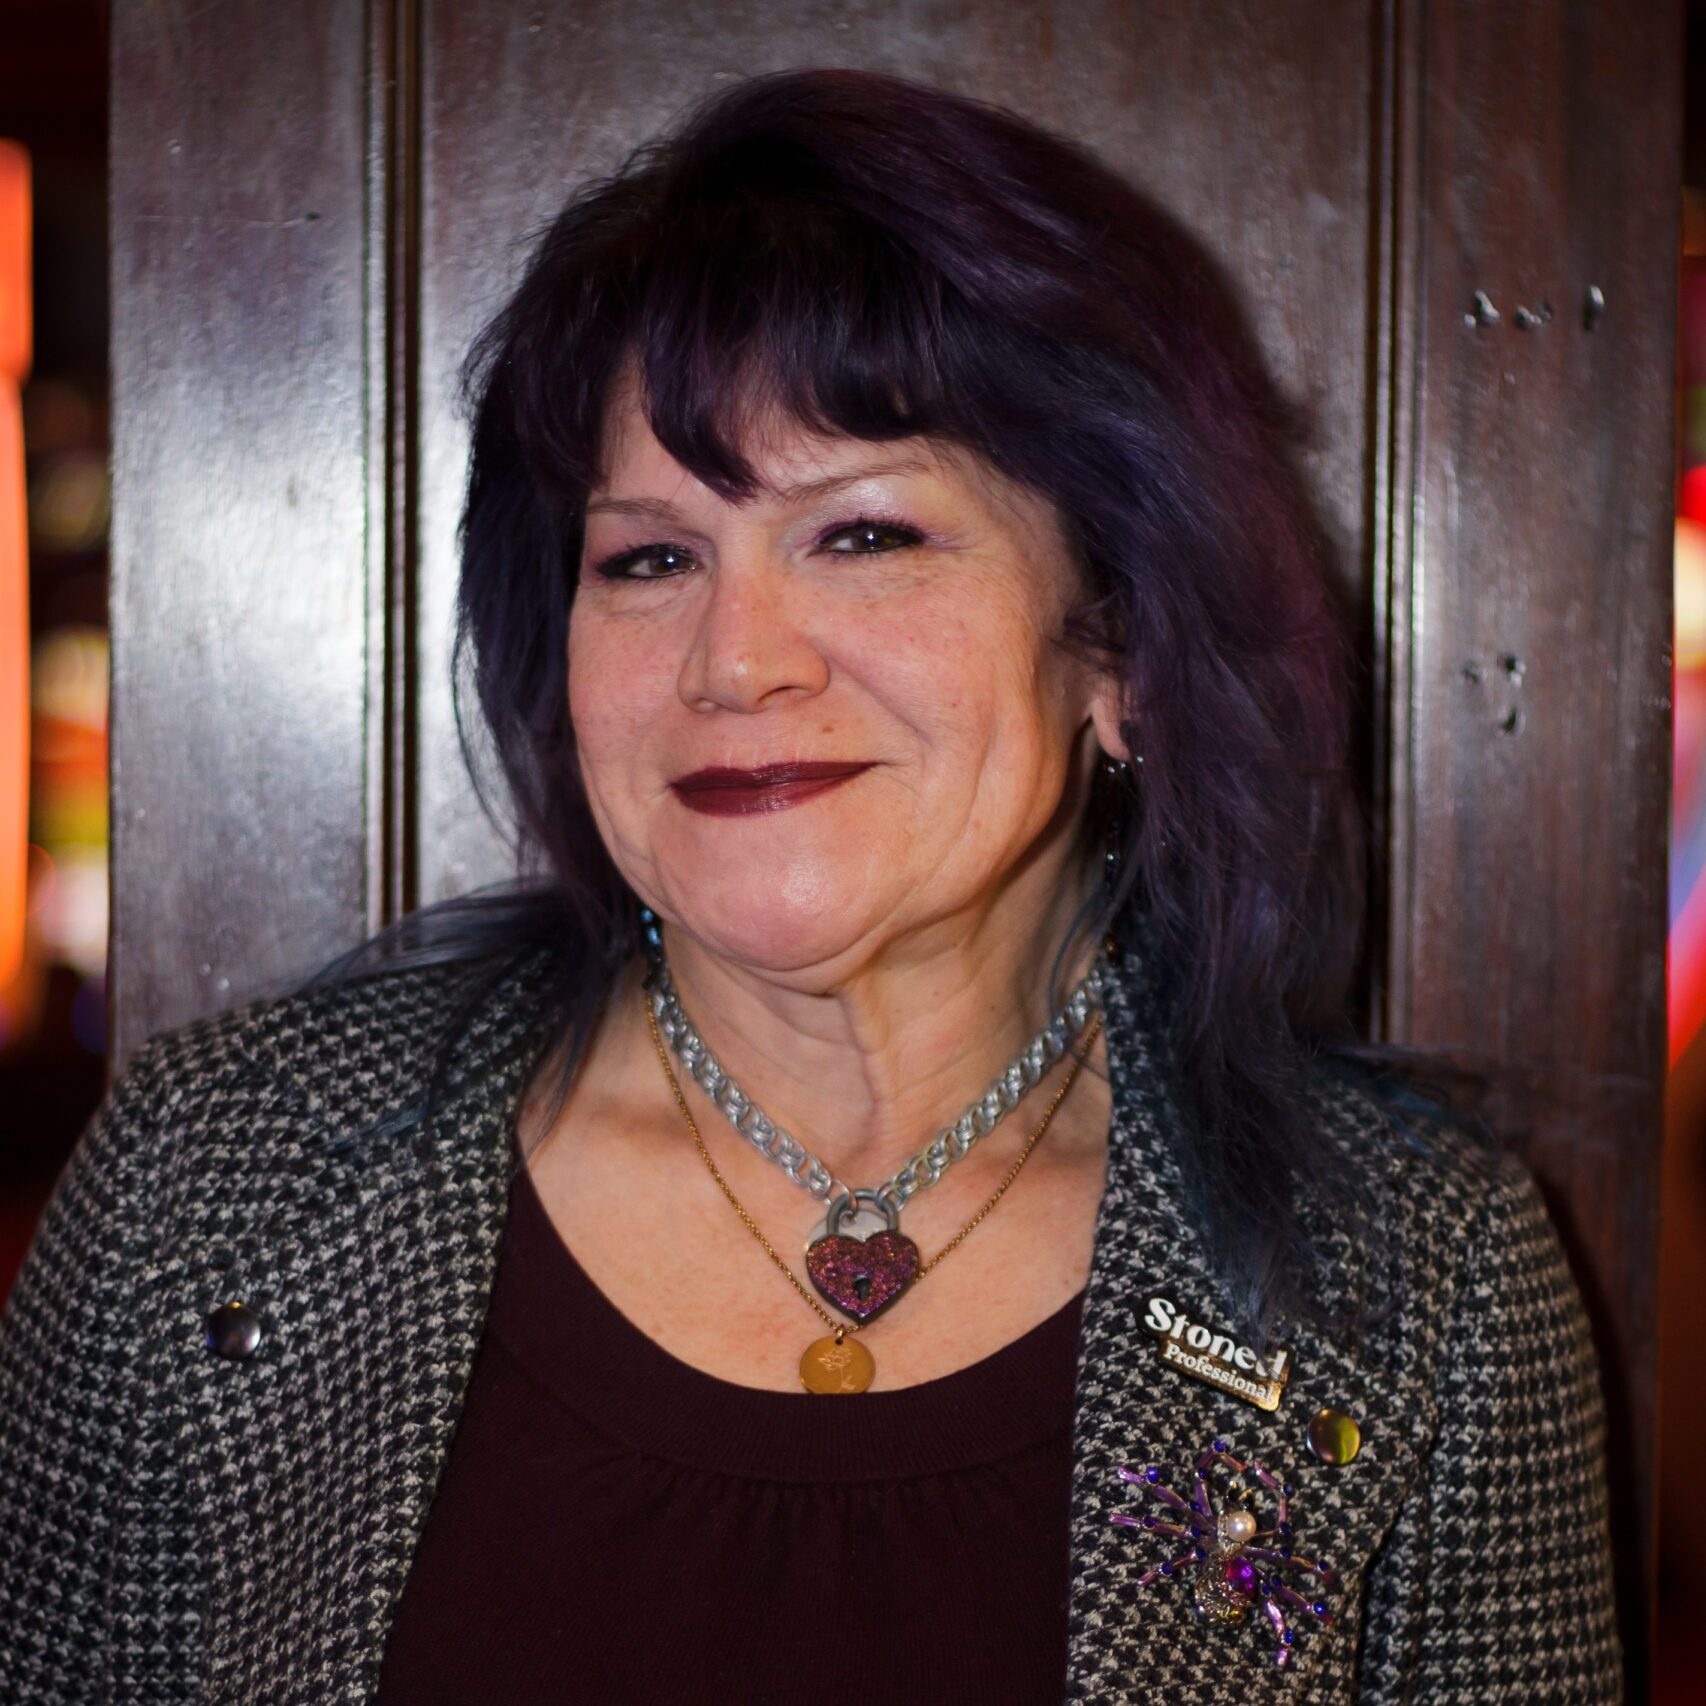 Chamber of Cannabis' Board Member Tina Schellinger